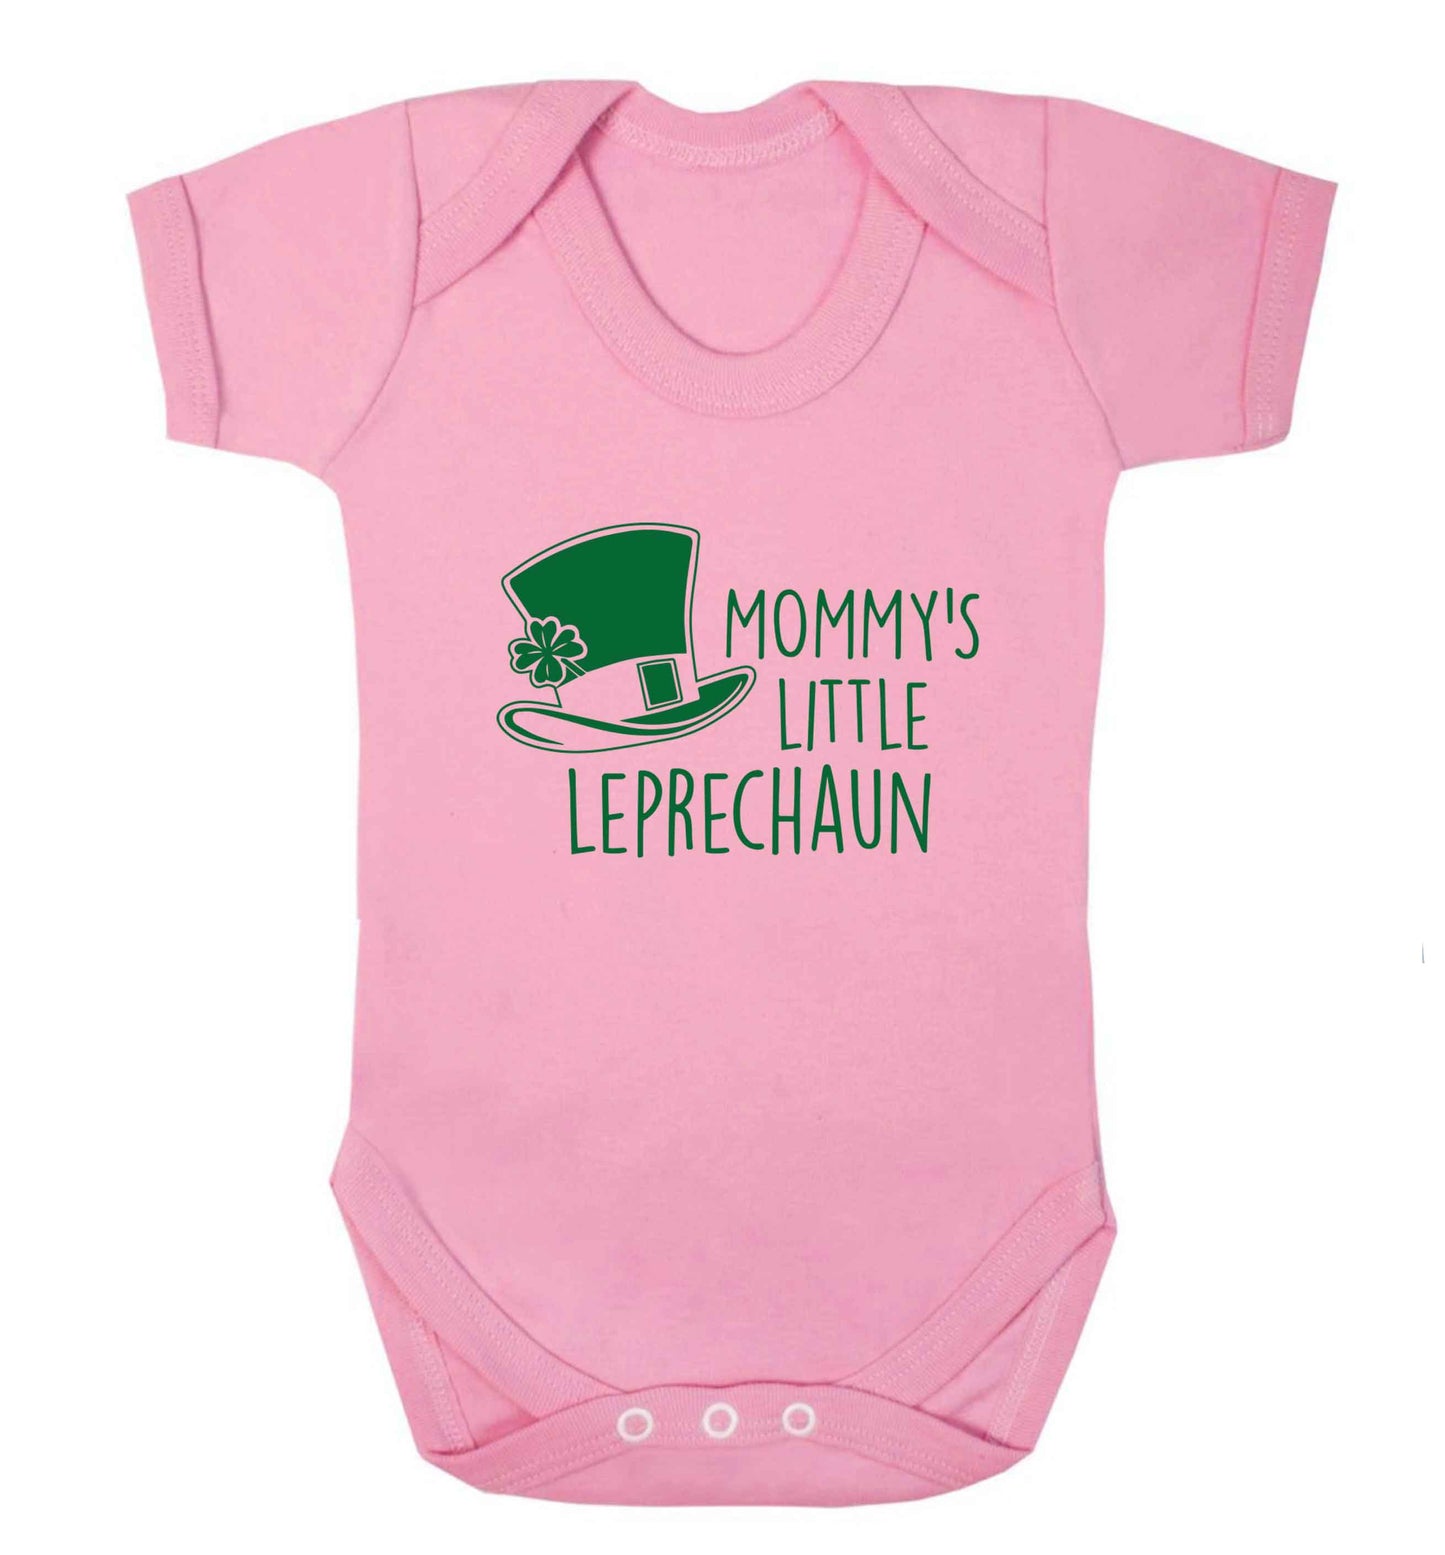 Mommy's little leprechaun baby vest pale pink 18-24 months